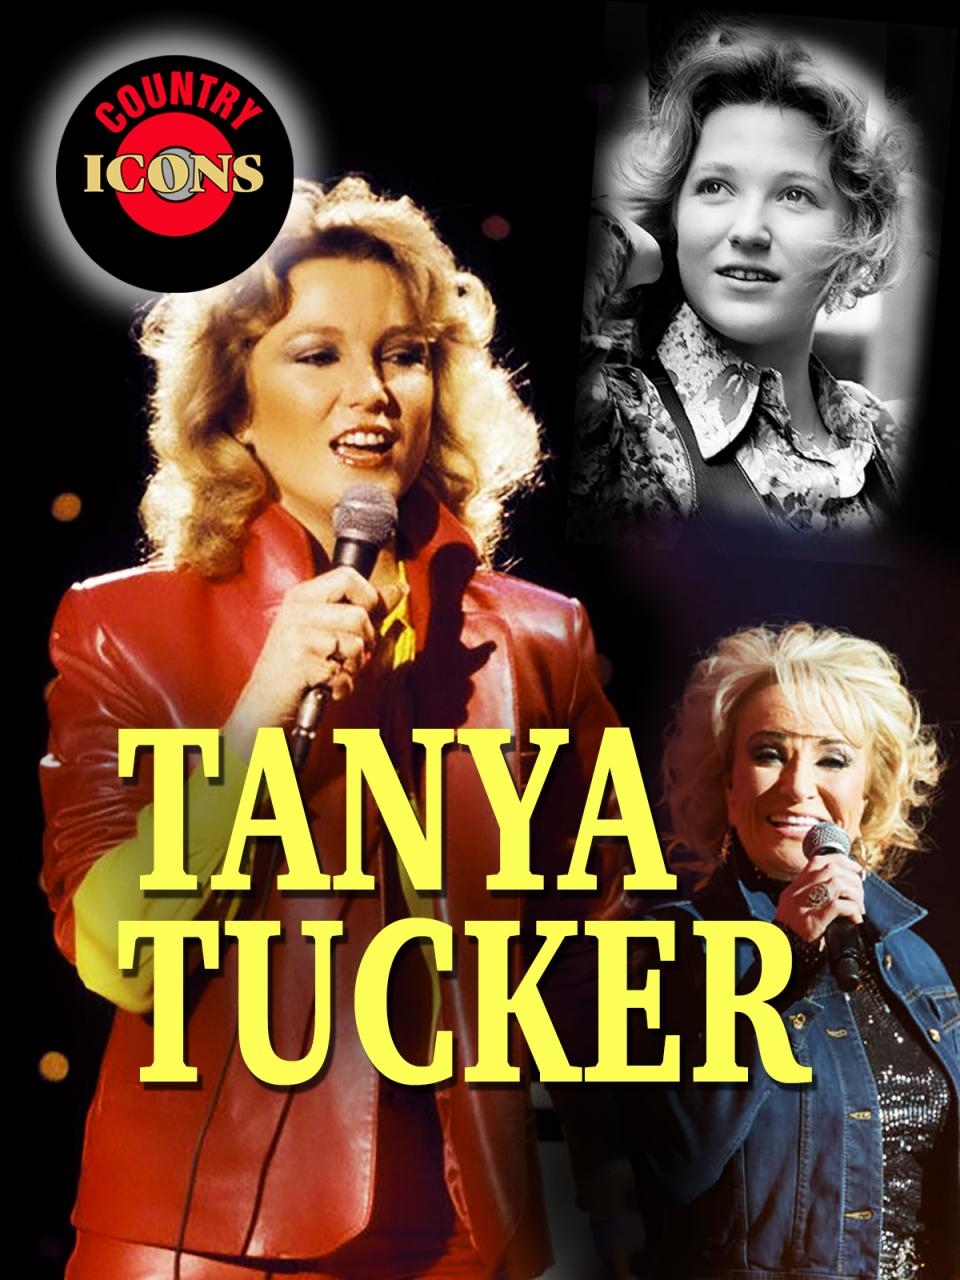 Country Icons: Tanya Tucker